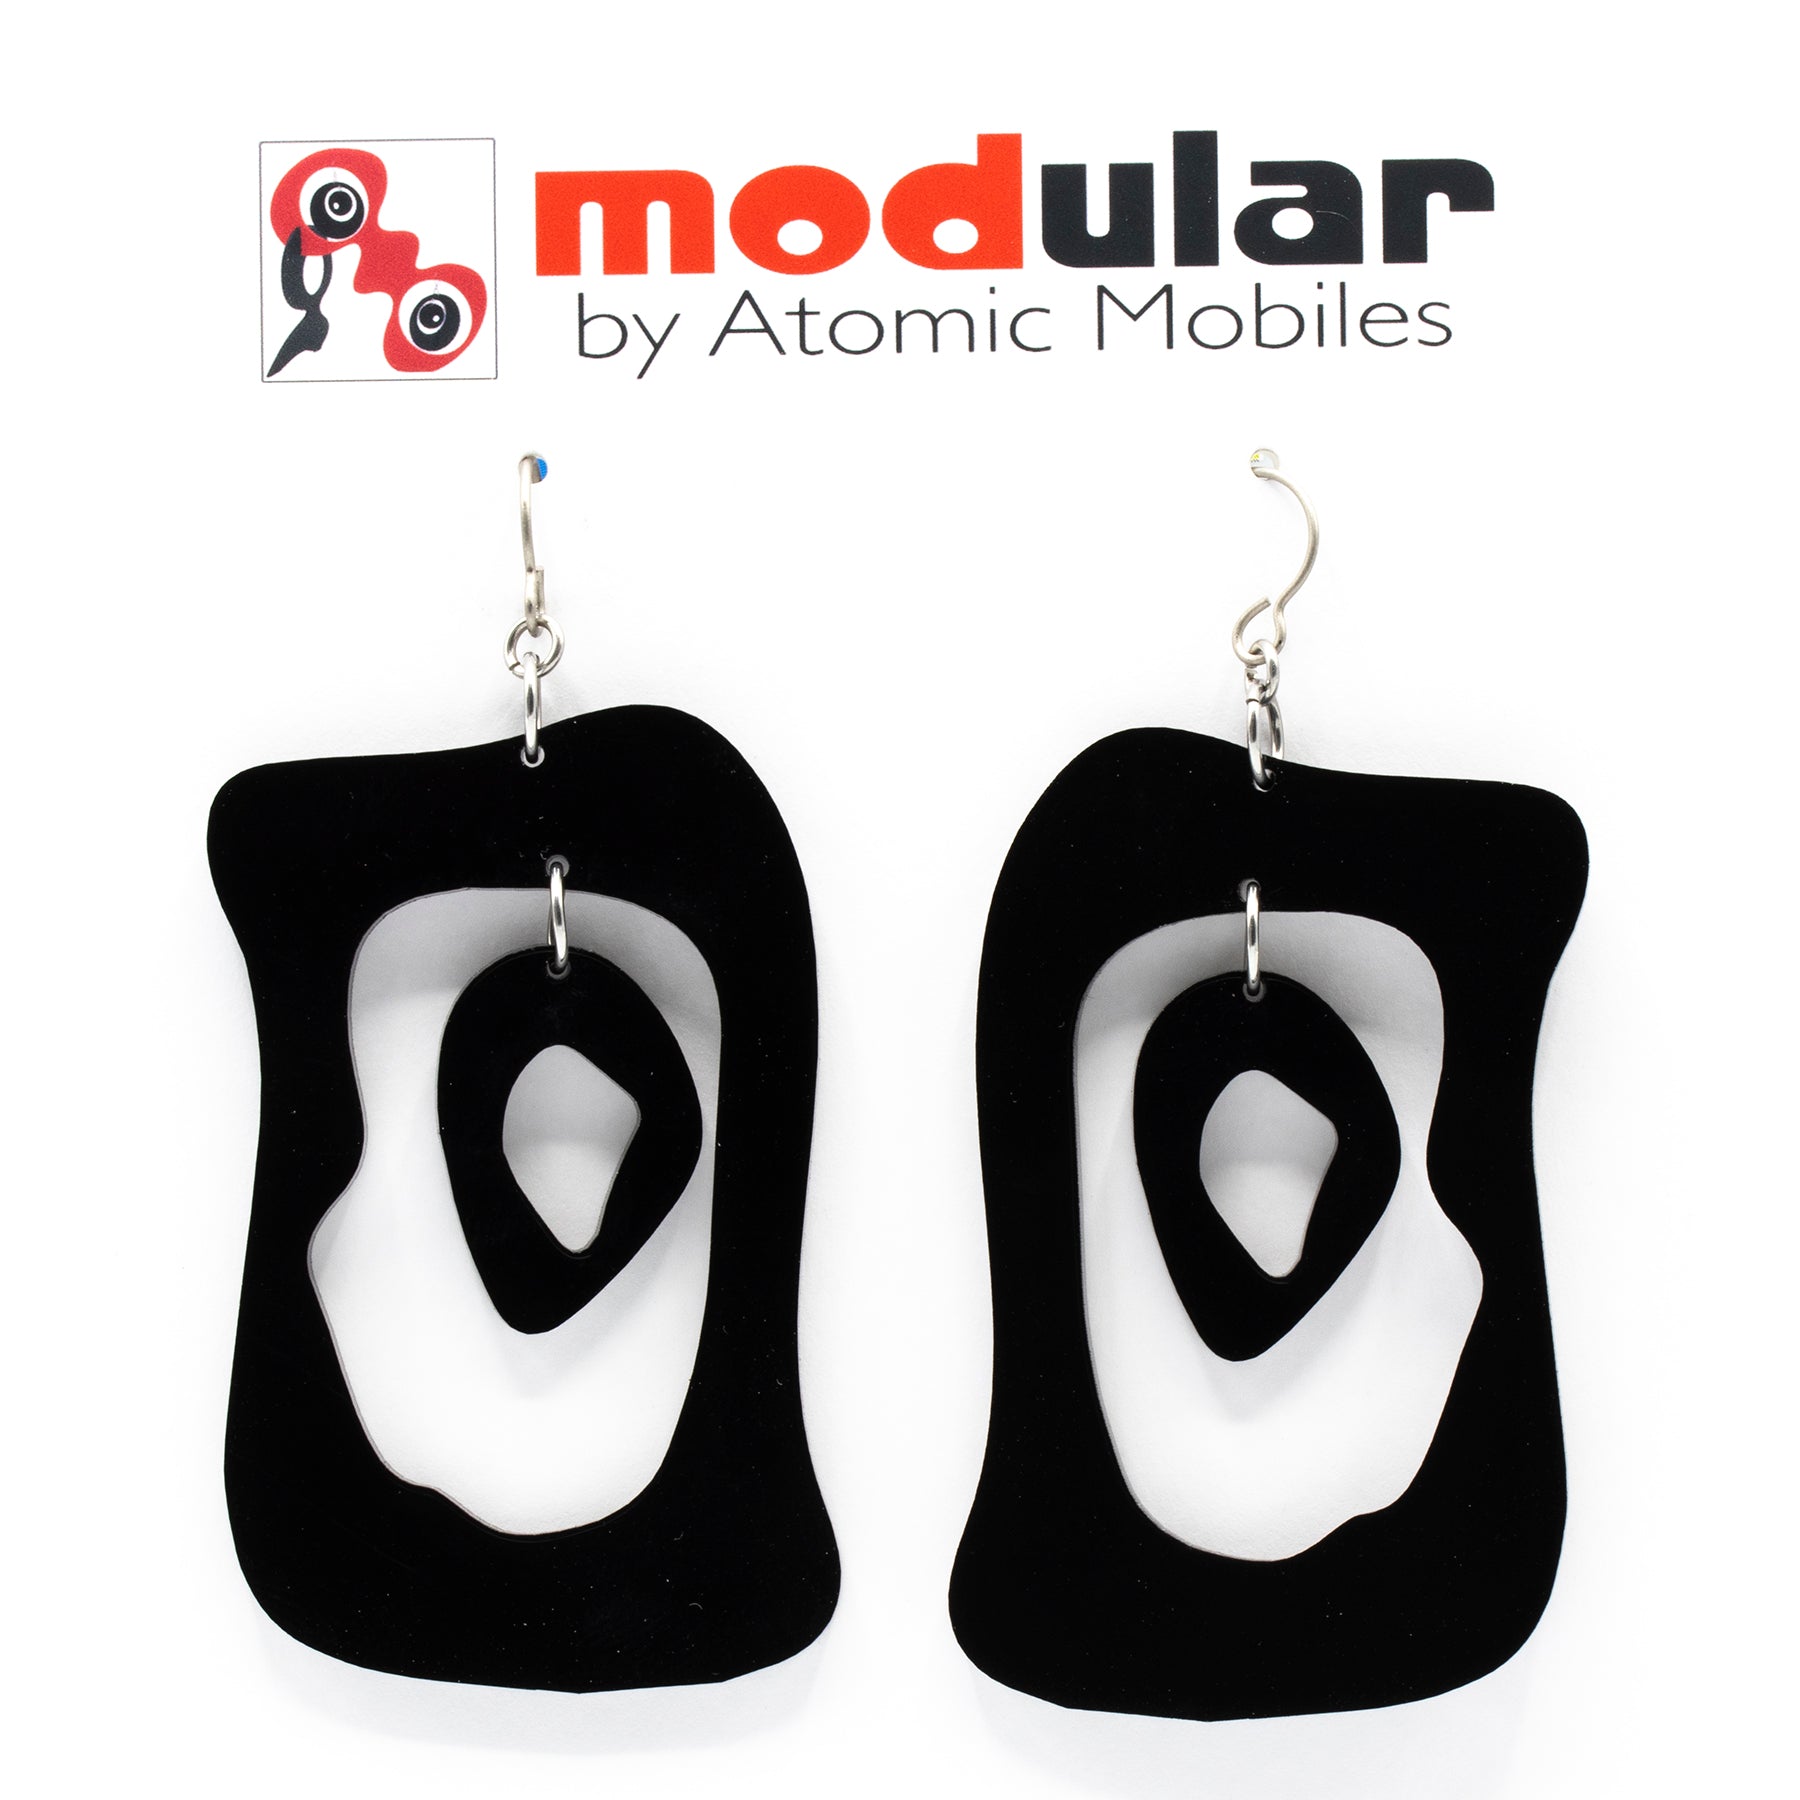 MODular Earrings - Modern Bliss Statement Earrings in Black by AtomicMobiles.com - retro era inspired mod handmade jewelry